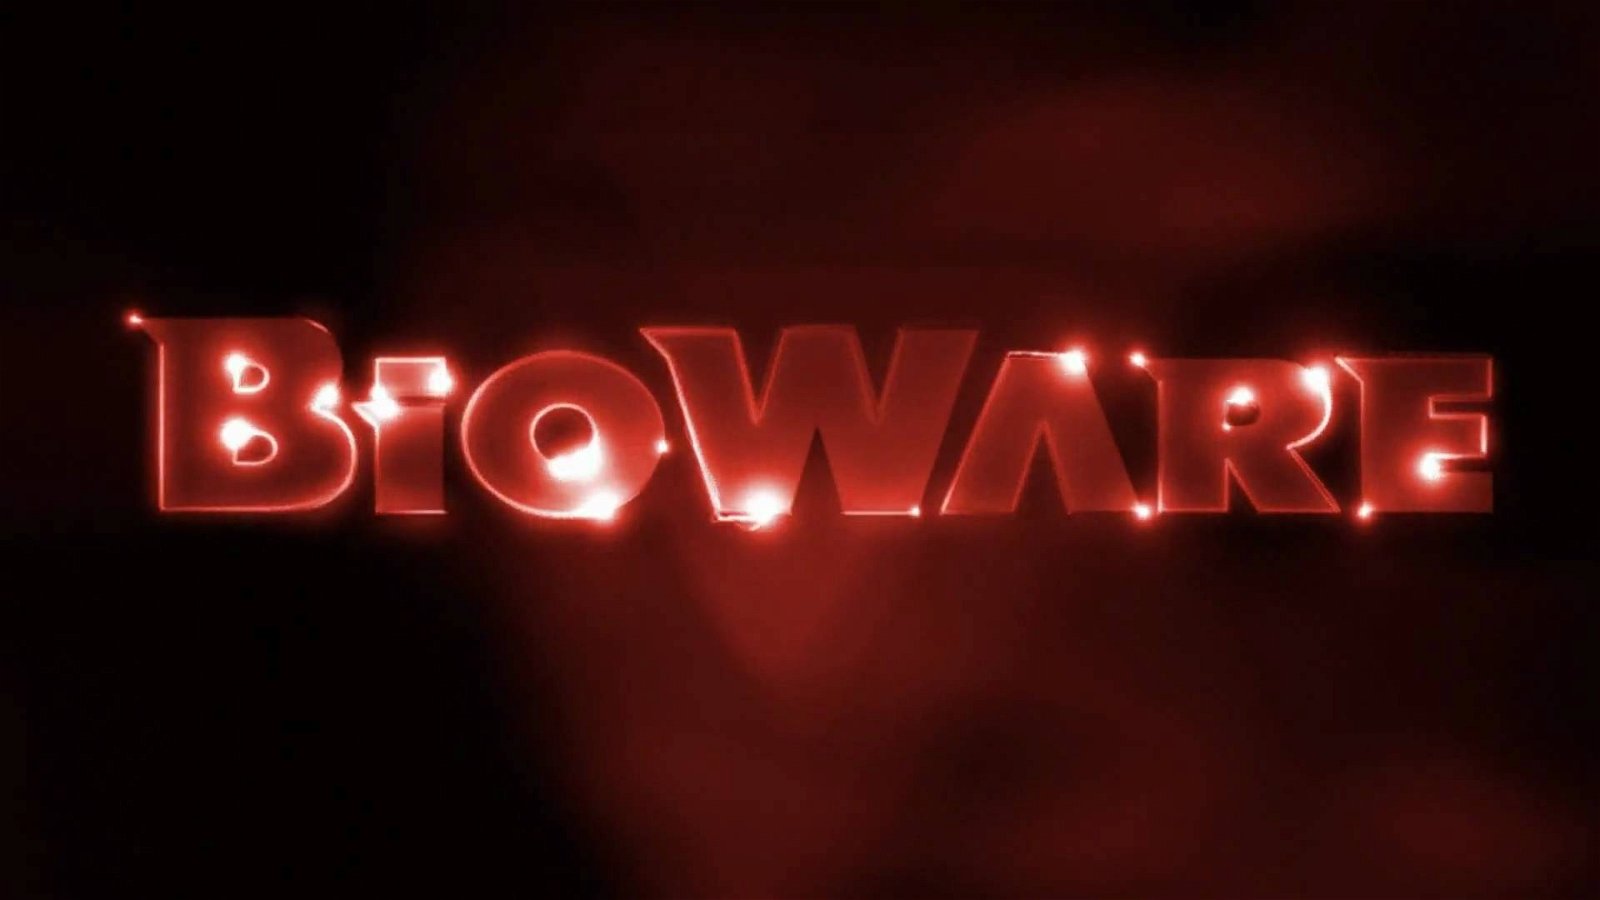 bioware logo